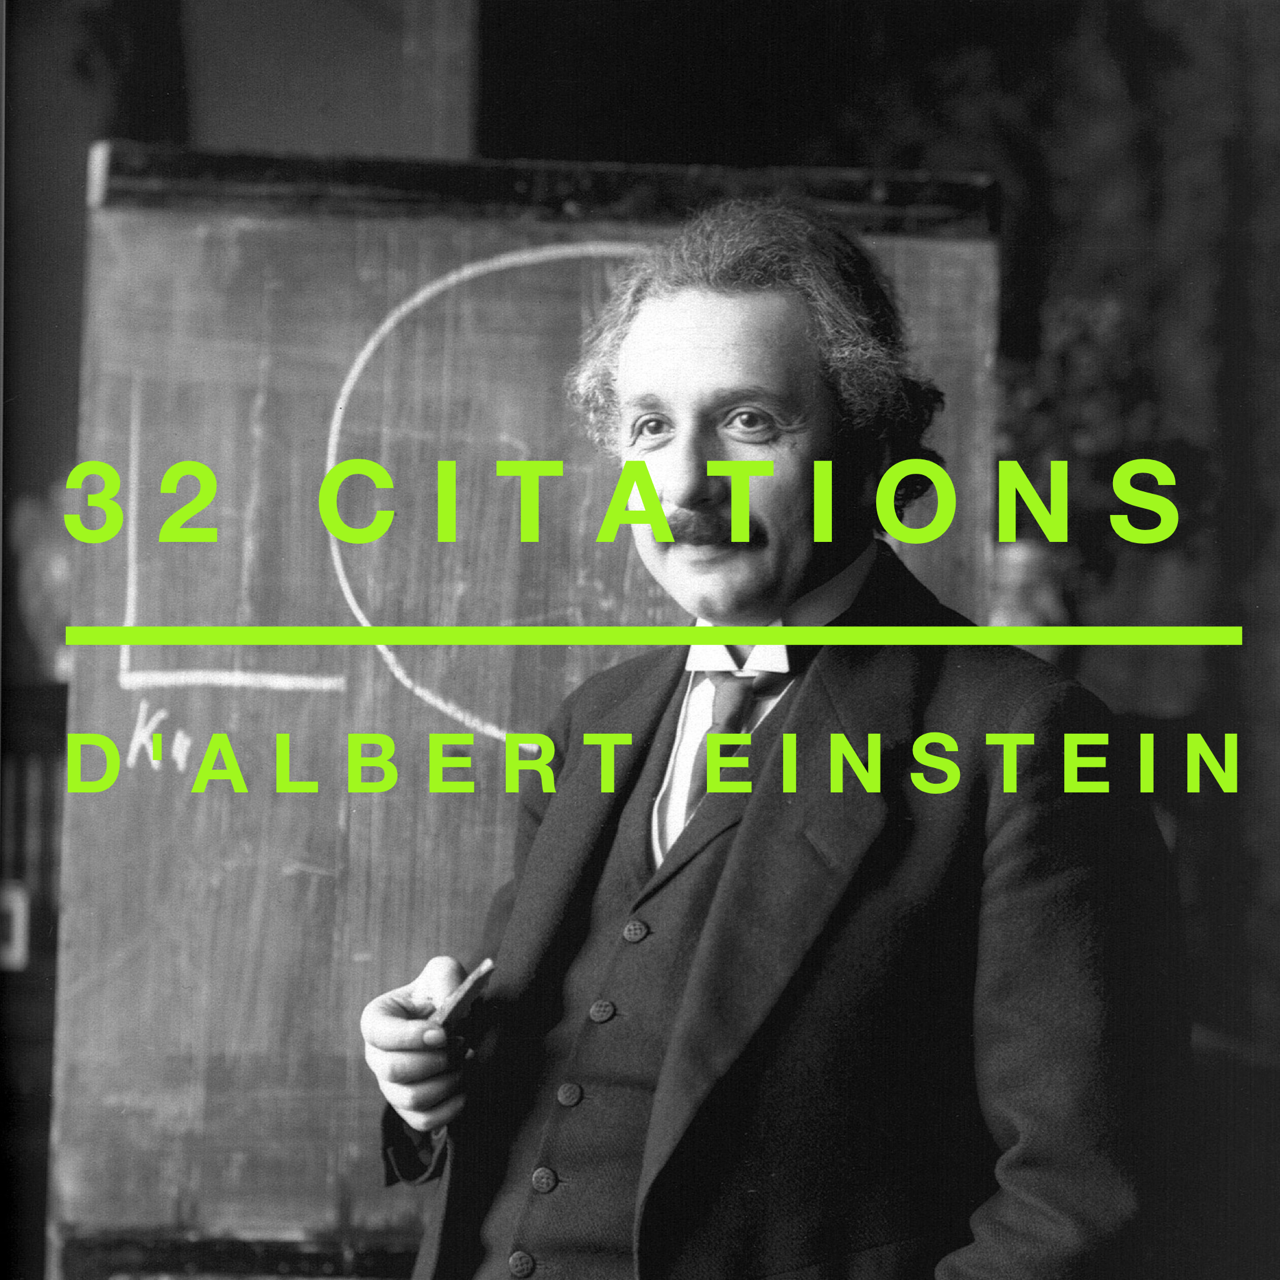 La sagesse et l’intelligence d’Albert Einstein en 32 citations